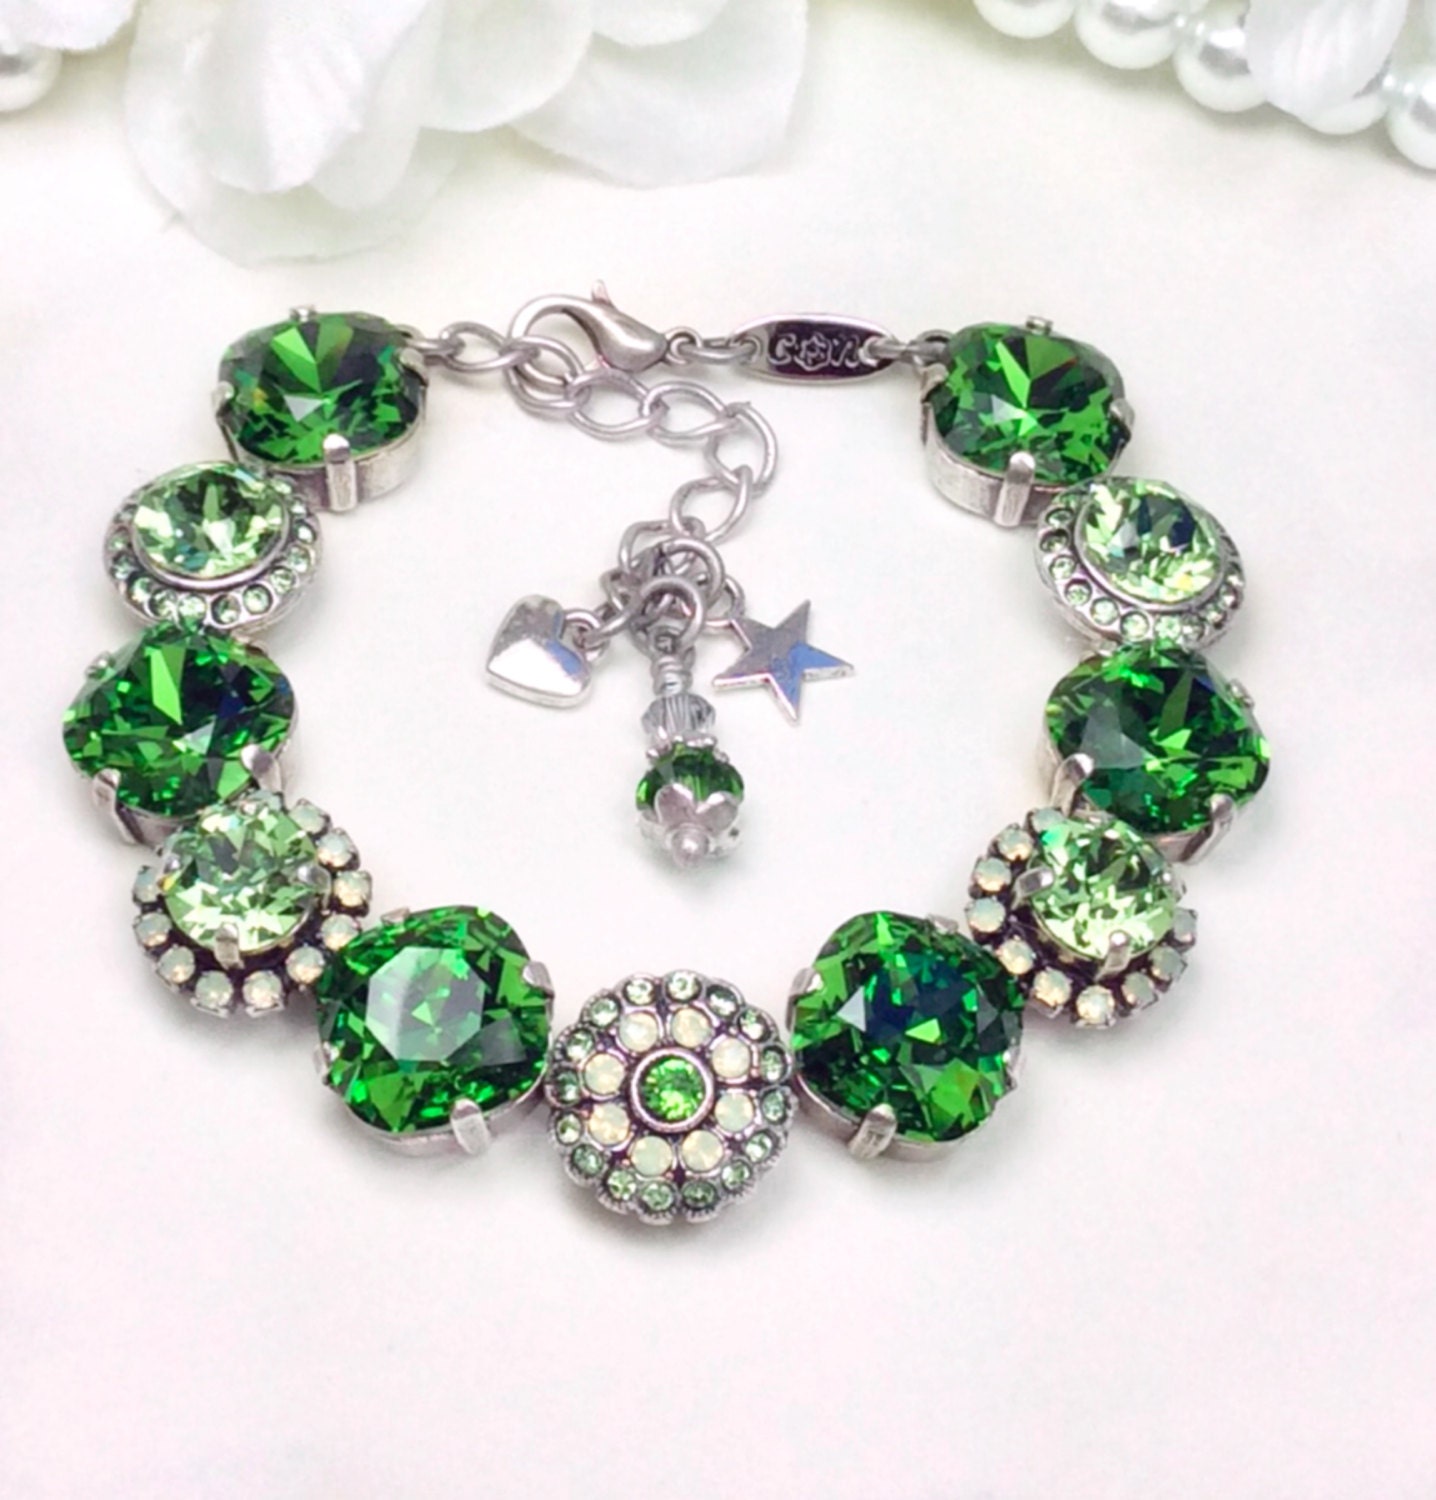 Swarovski Crystal 8.5mm Flower Necklace  & Stunning "Rosetta" Fern Green/Peridot 12MM/ 8.5mm Embellished Wrist Candy Bracelet- FREE SHIPPING